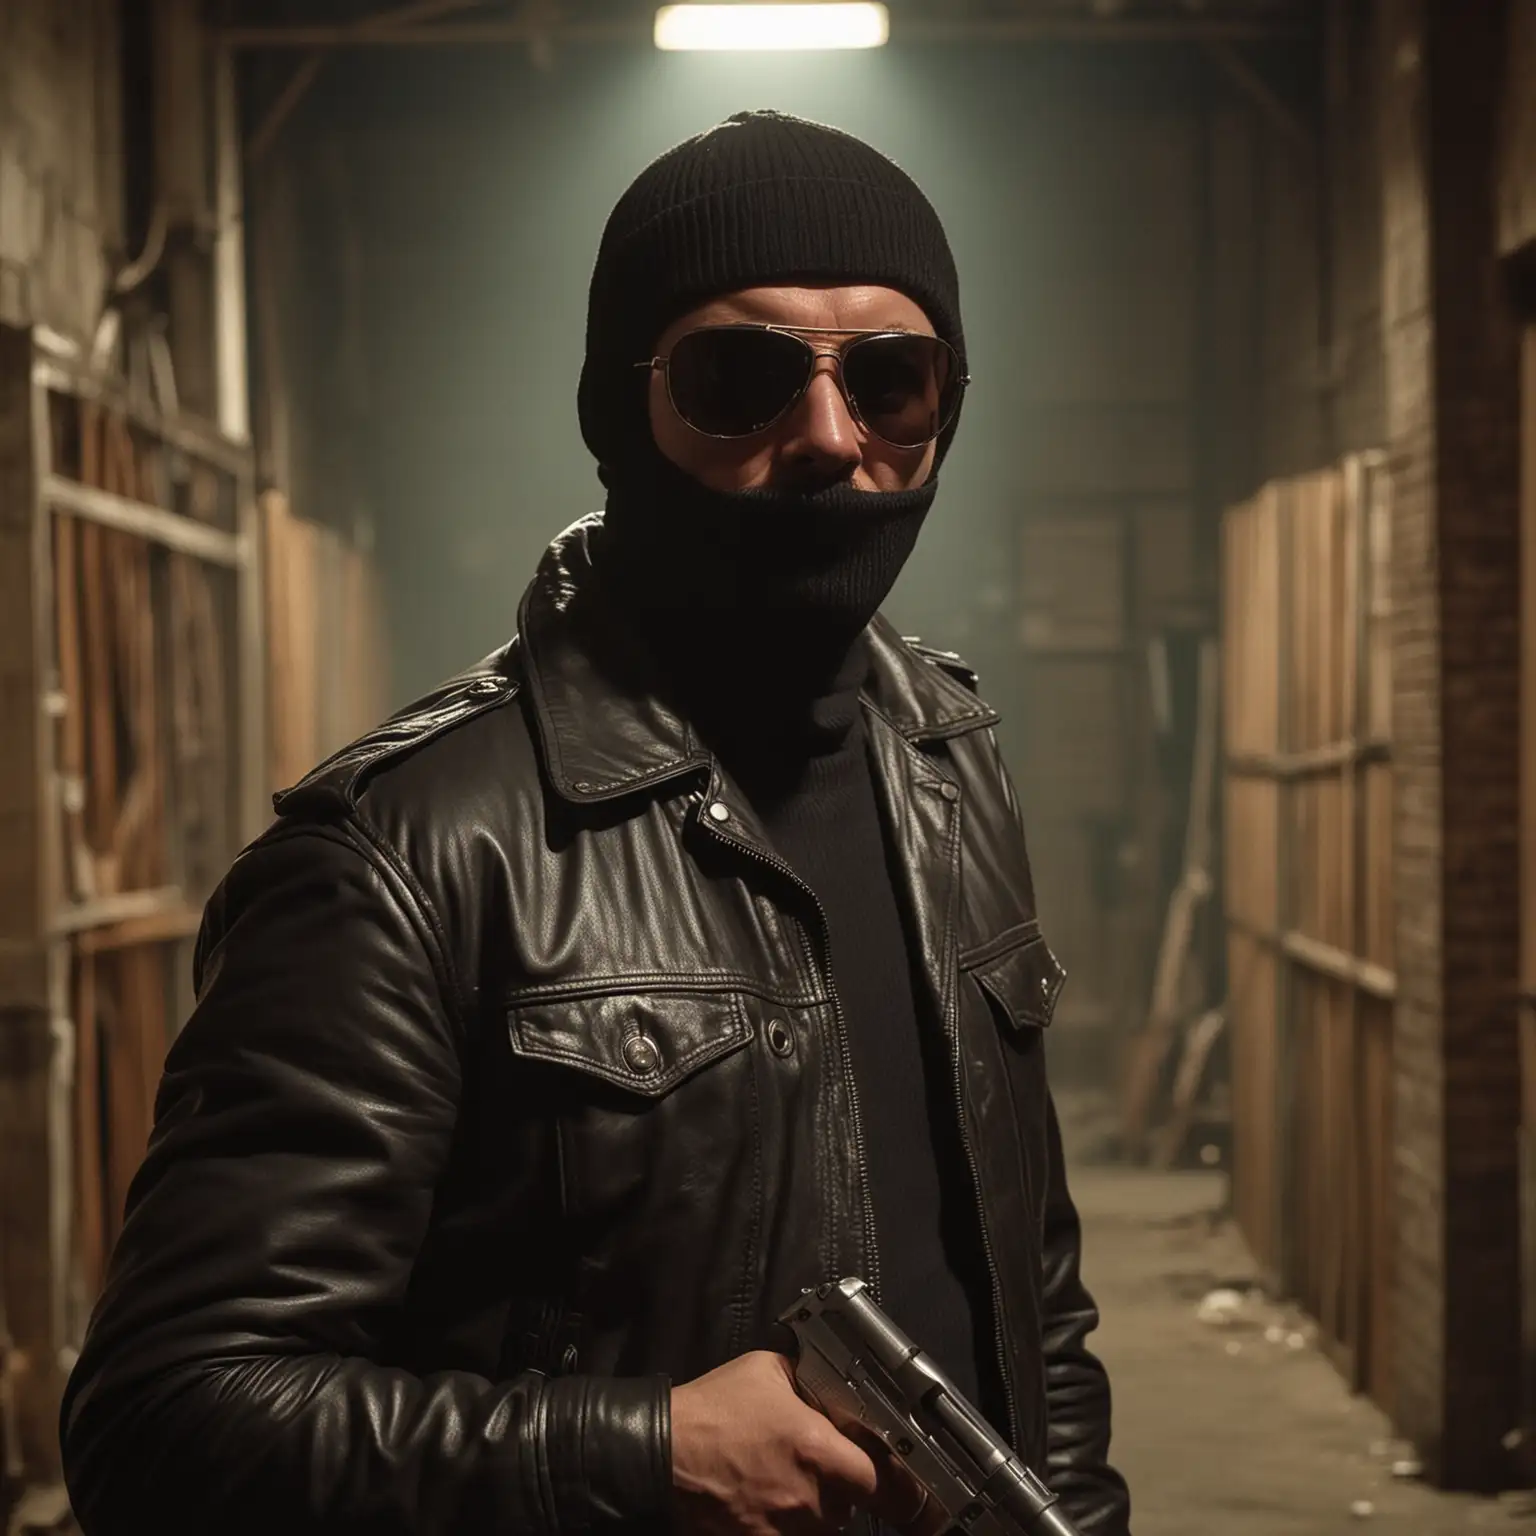 Angry Private Cop in Balaclava Holds Gun in Dark Warehouse 70s Crime Film Scene